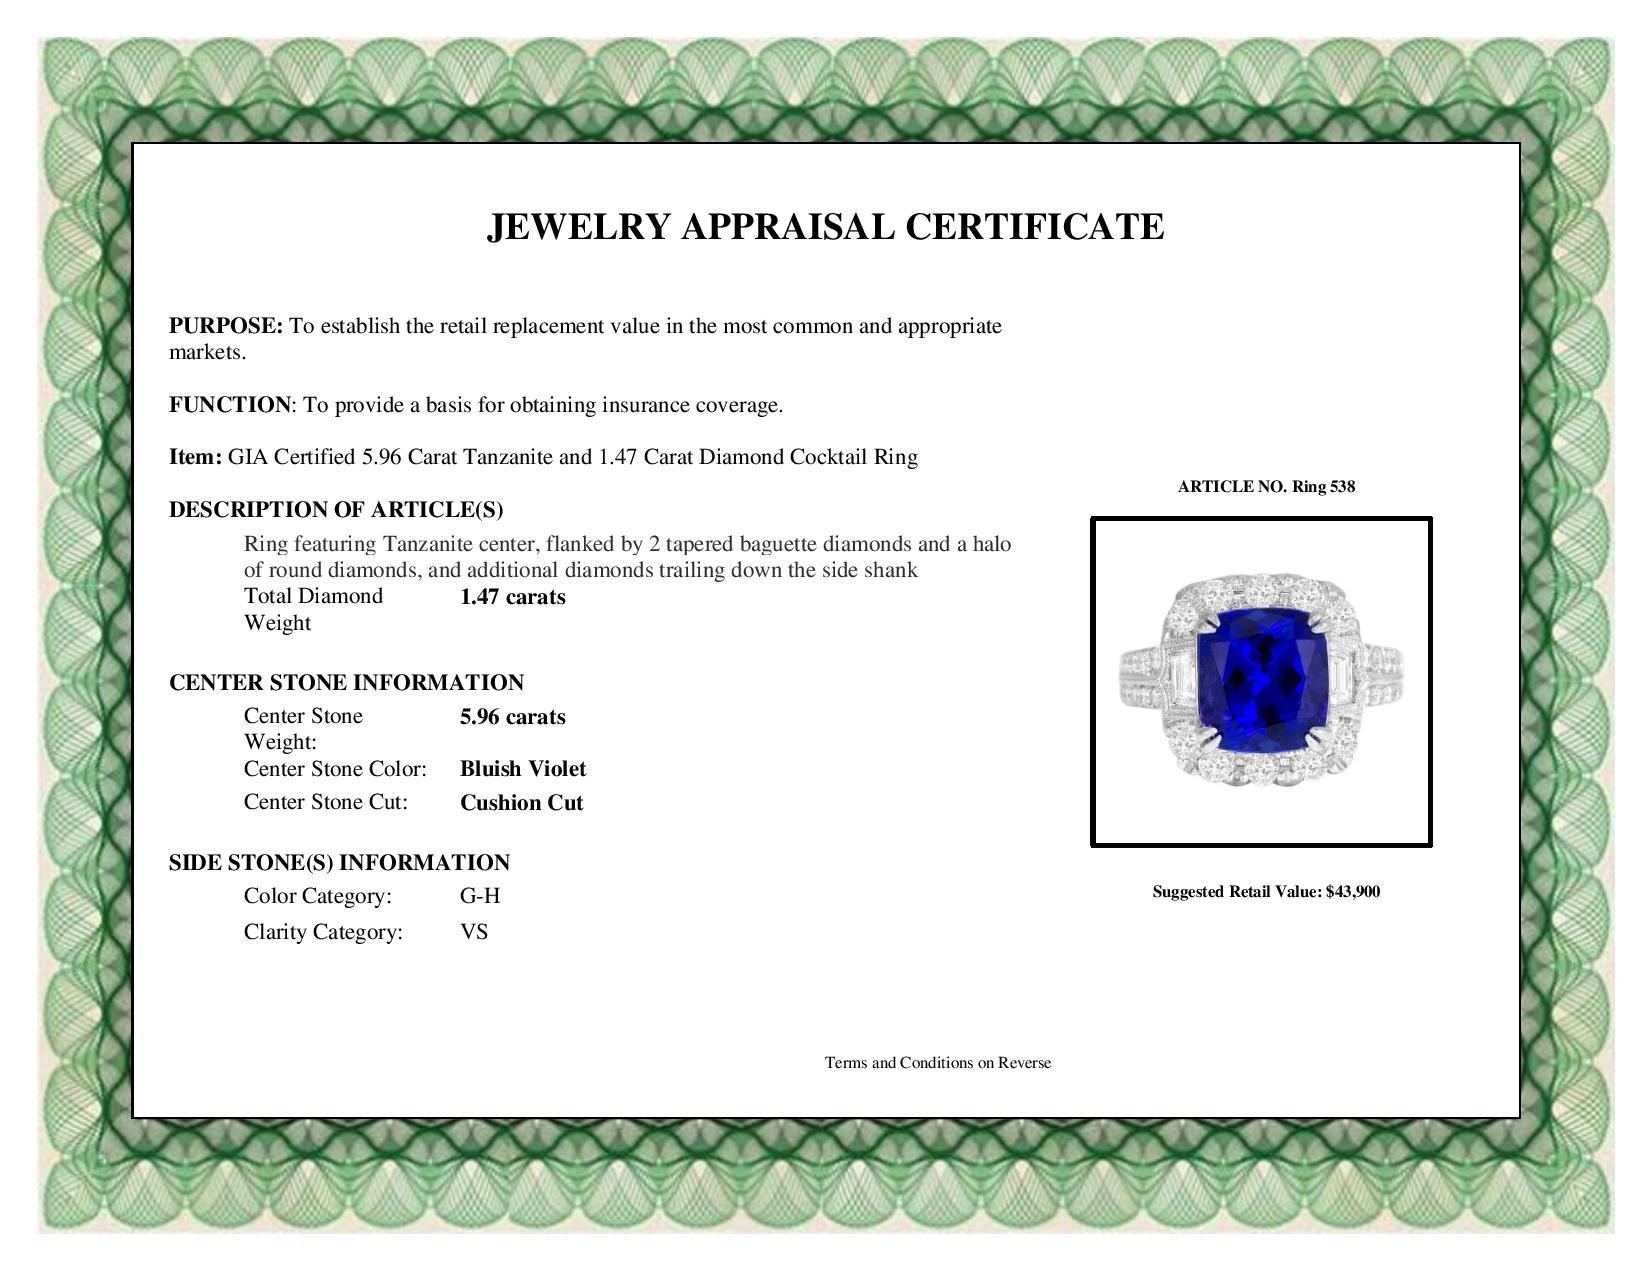 DiamondTown GIA Certified 5.96 Carat Tanzanite and 1.47 Carat Diamond Ring 2